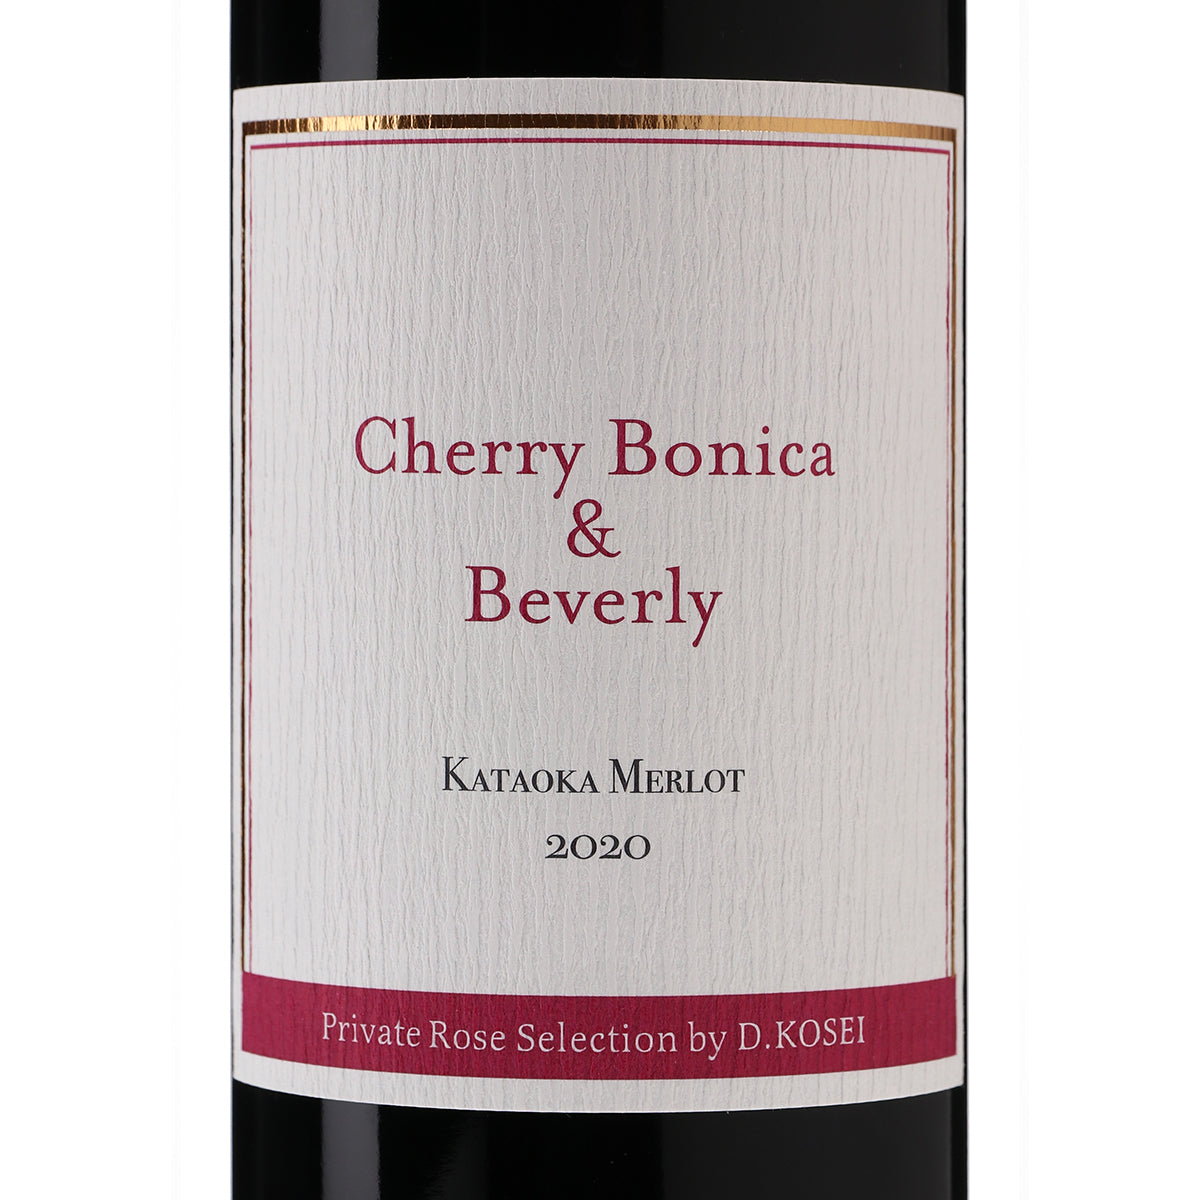 Cherry Bonica & Beverly KATAOKA MERLOT 2020